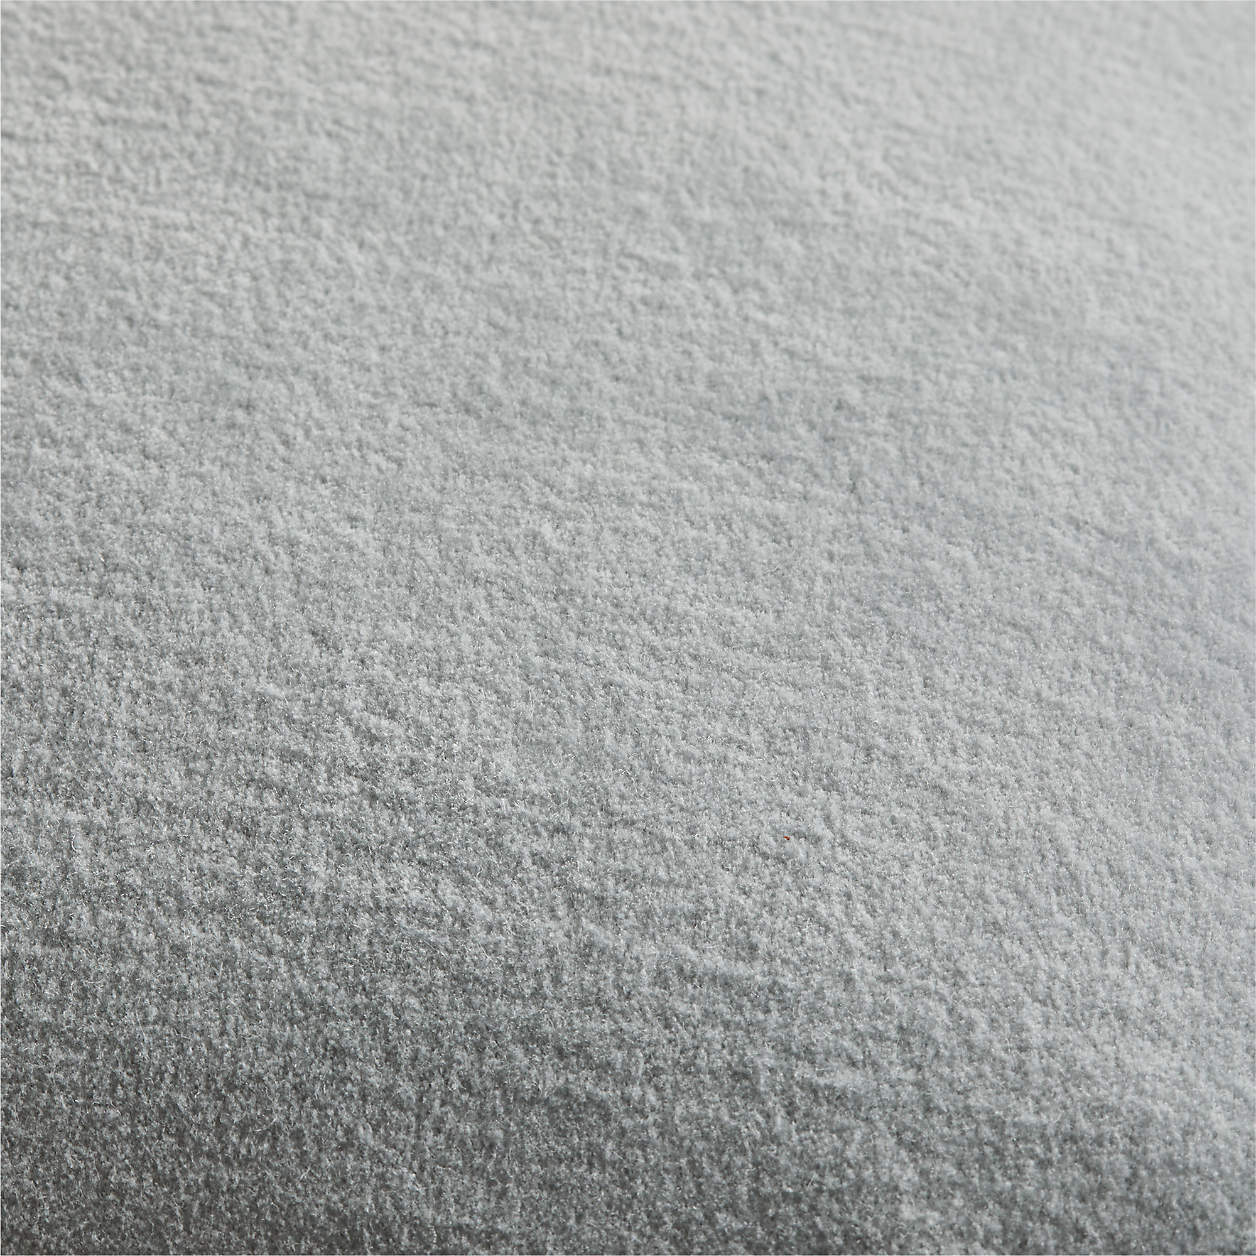 Organic Washed Cotton Velvet 18"x12" Indigo Blue Throw Pillow Cover